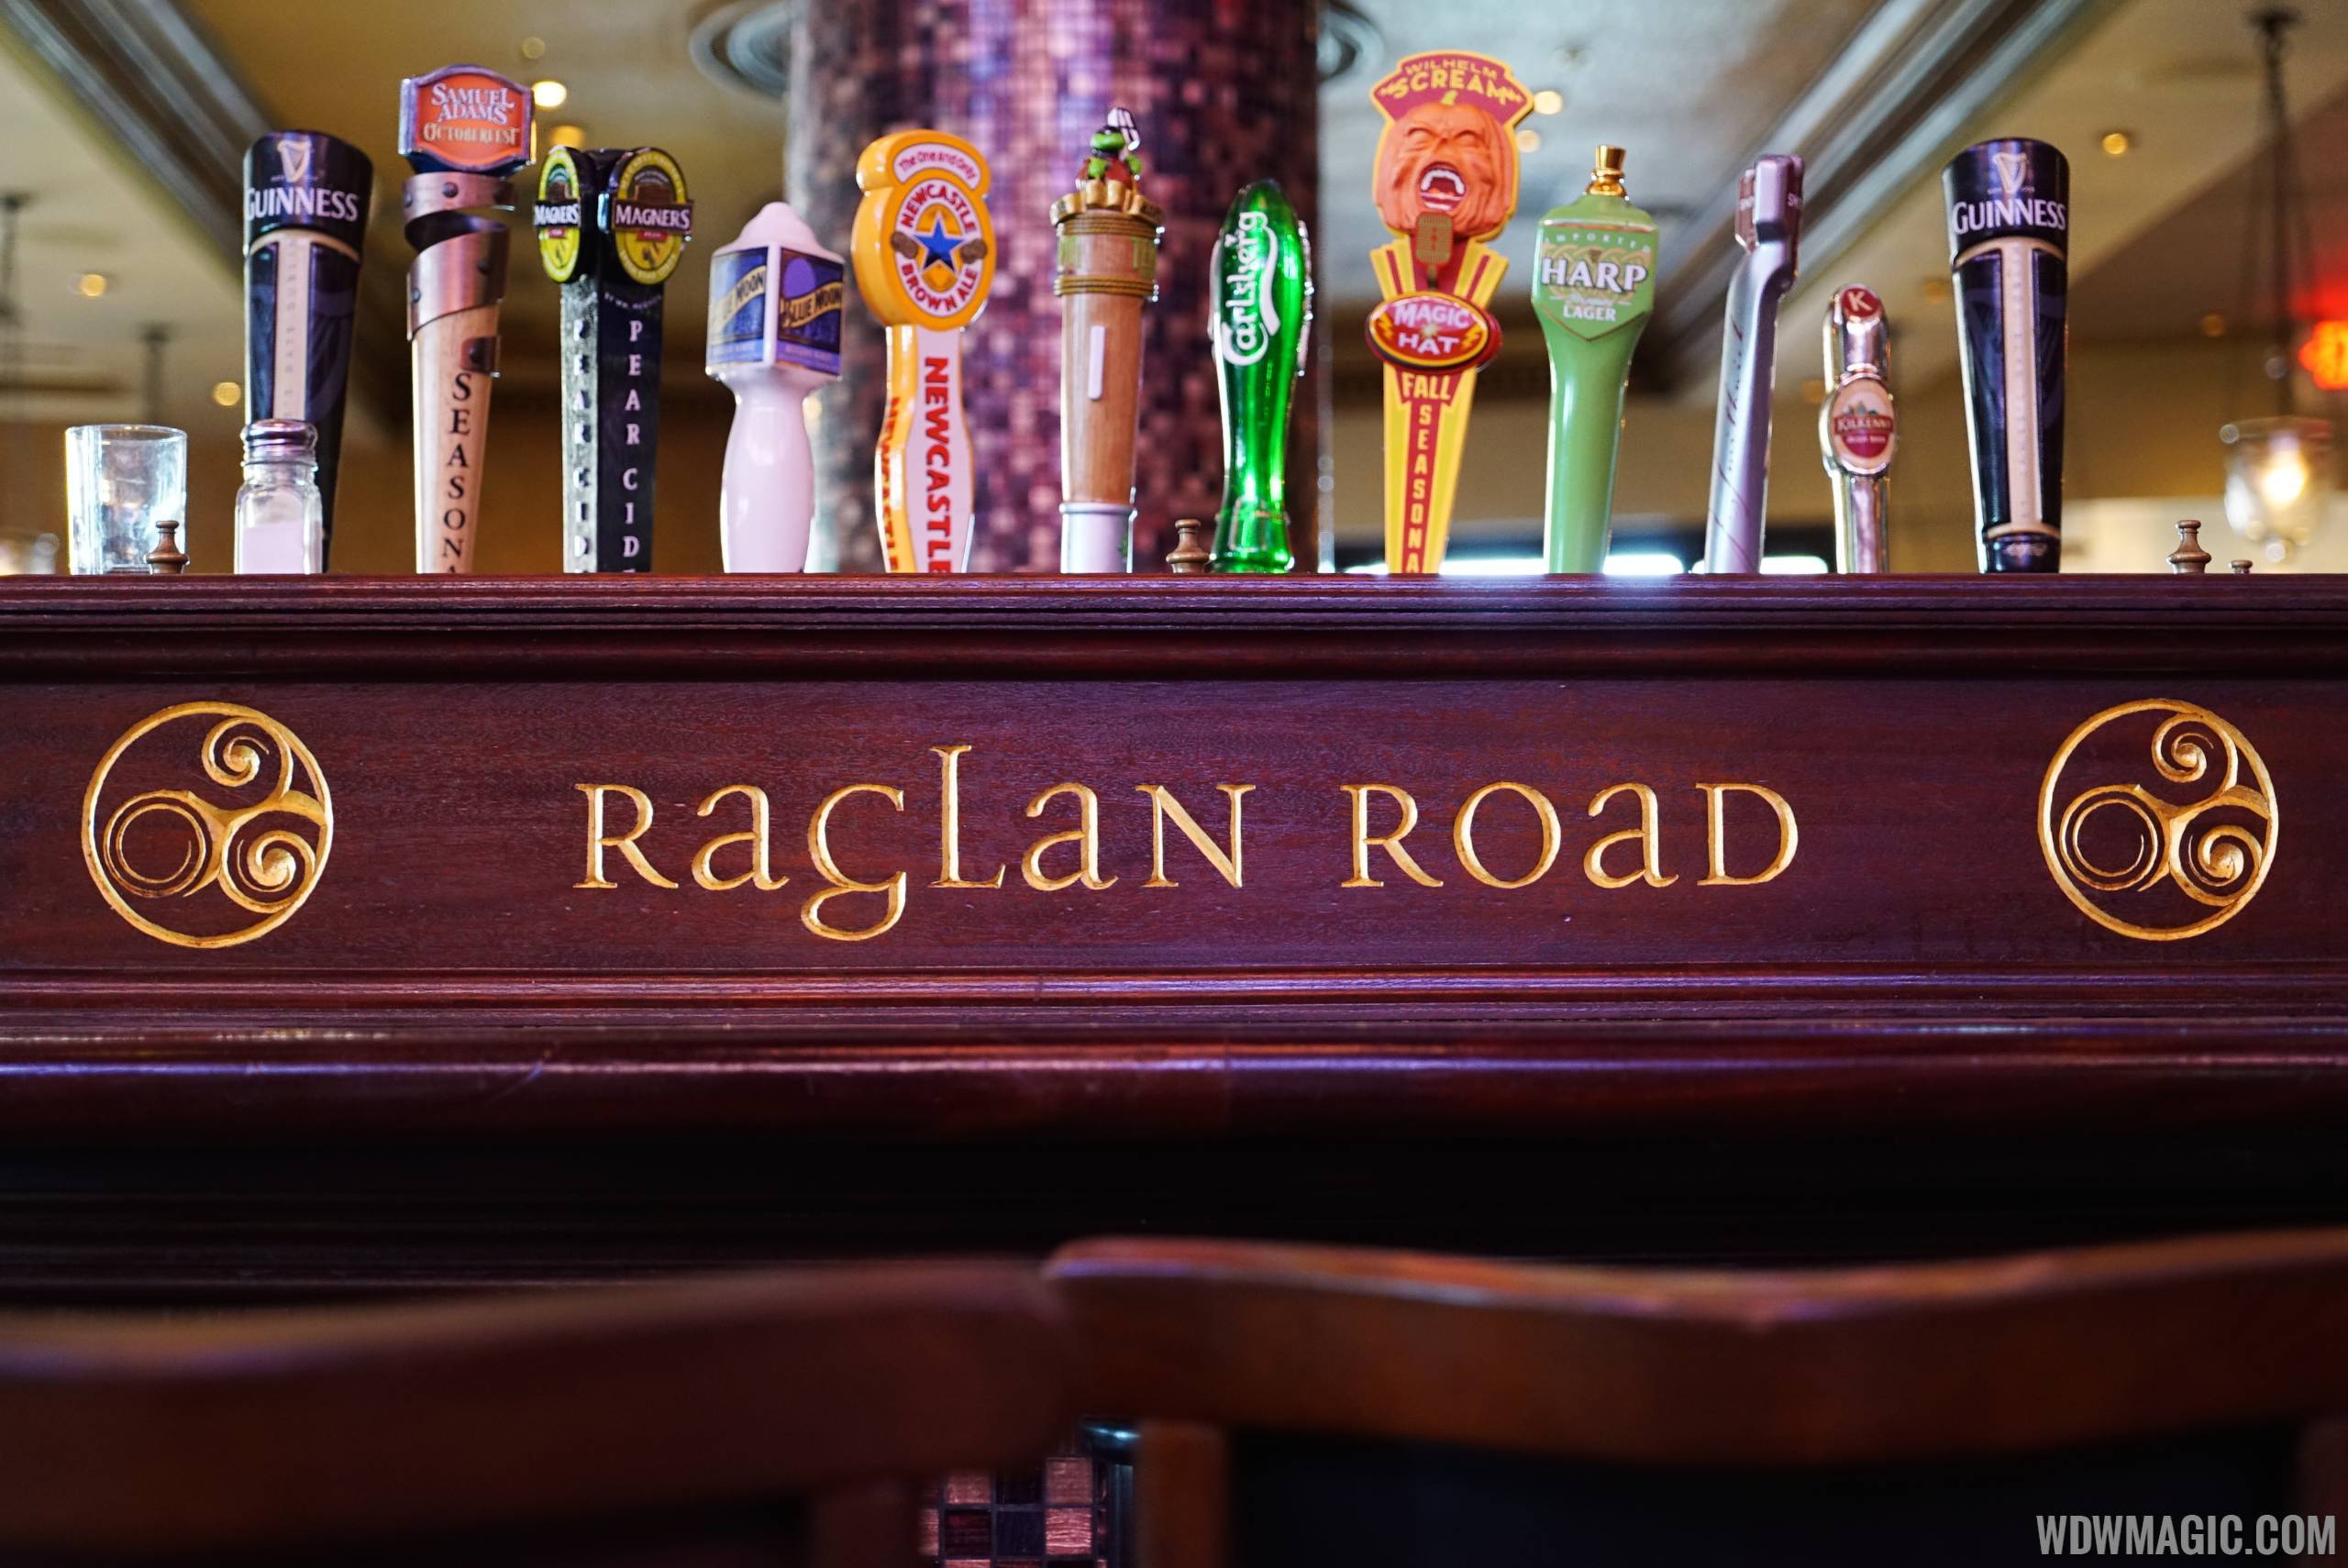 Raglan Road hosting its 4th annual Great Irish Hooley this weekend